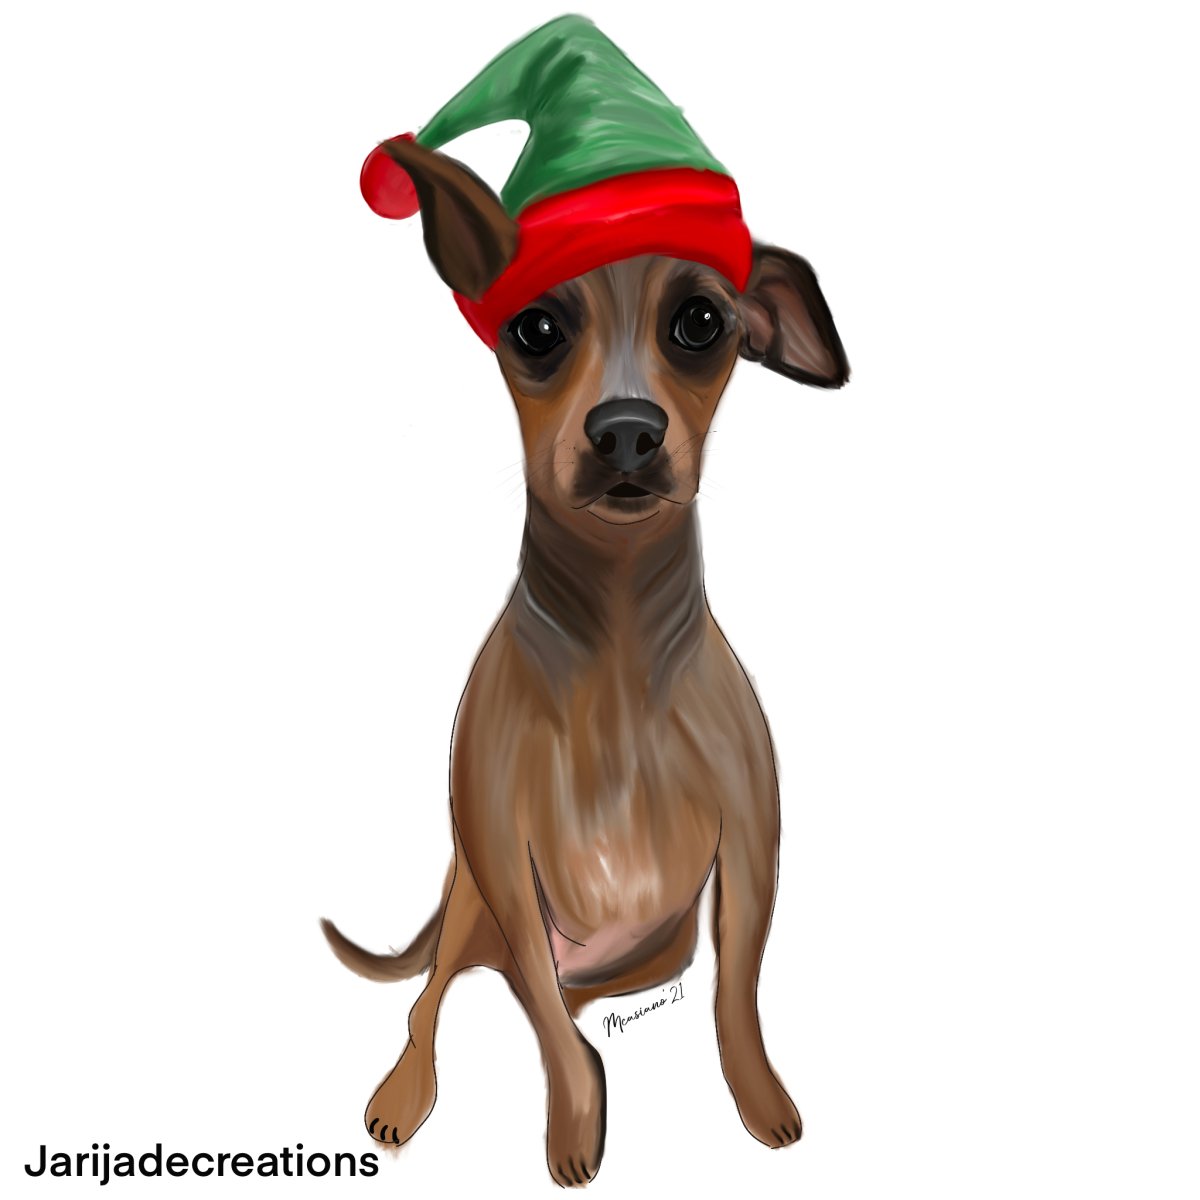 Capture the Magic of Your Pet this Holiday Season - Jarijadecreations